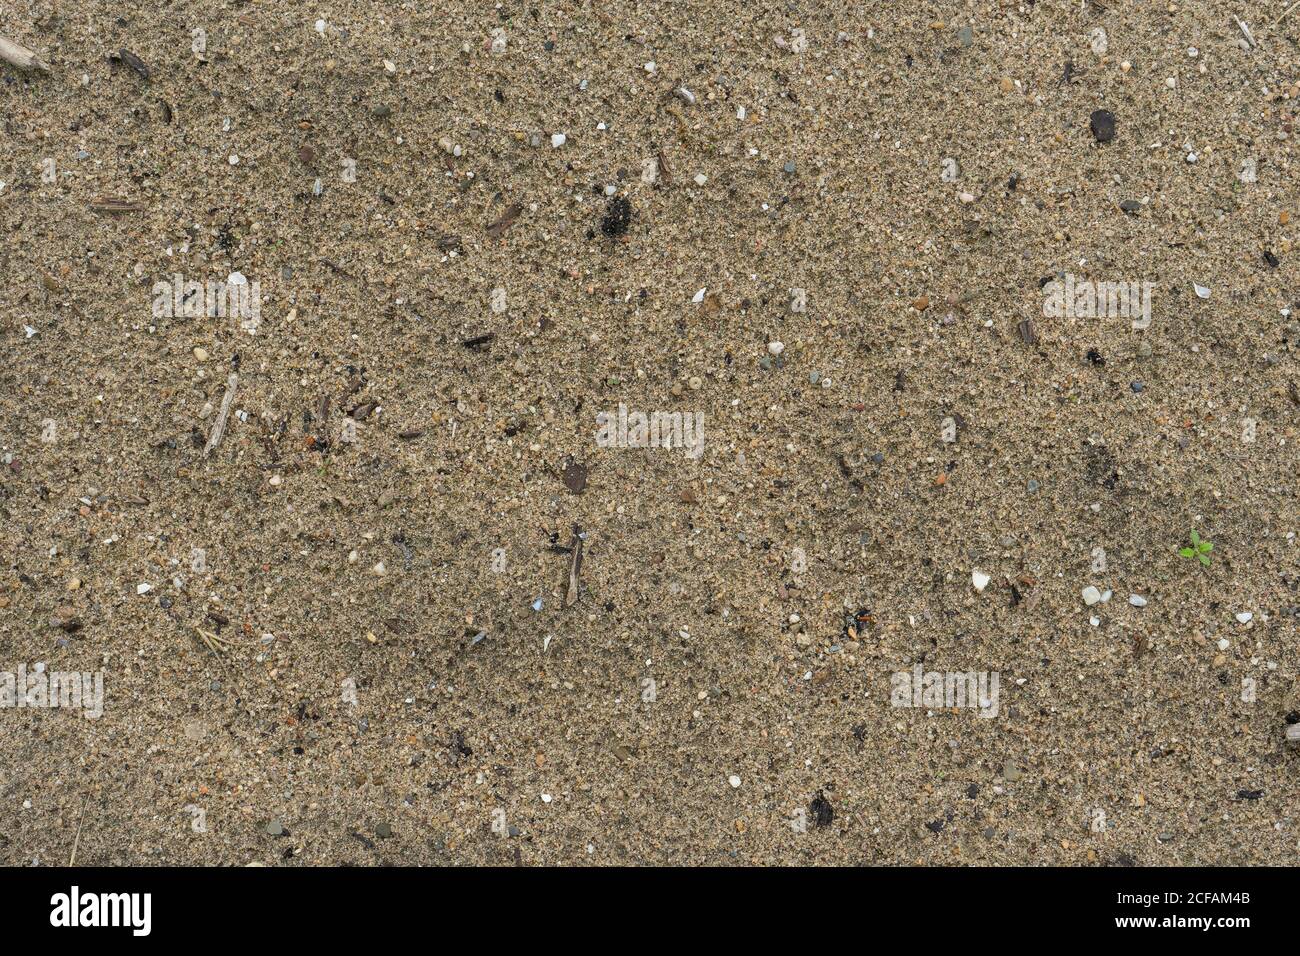 grainy rain drops sand texture mixed with small pebble, wooden sticks Stock Photo